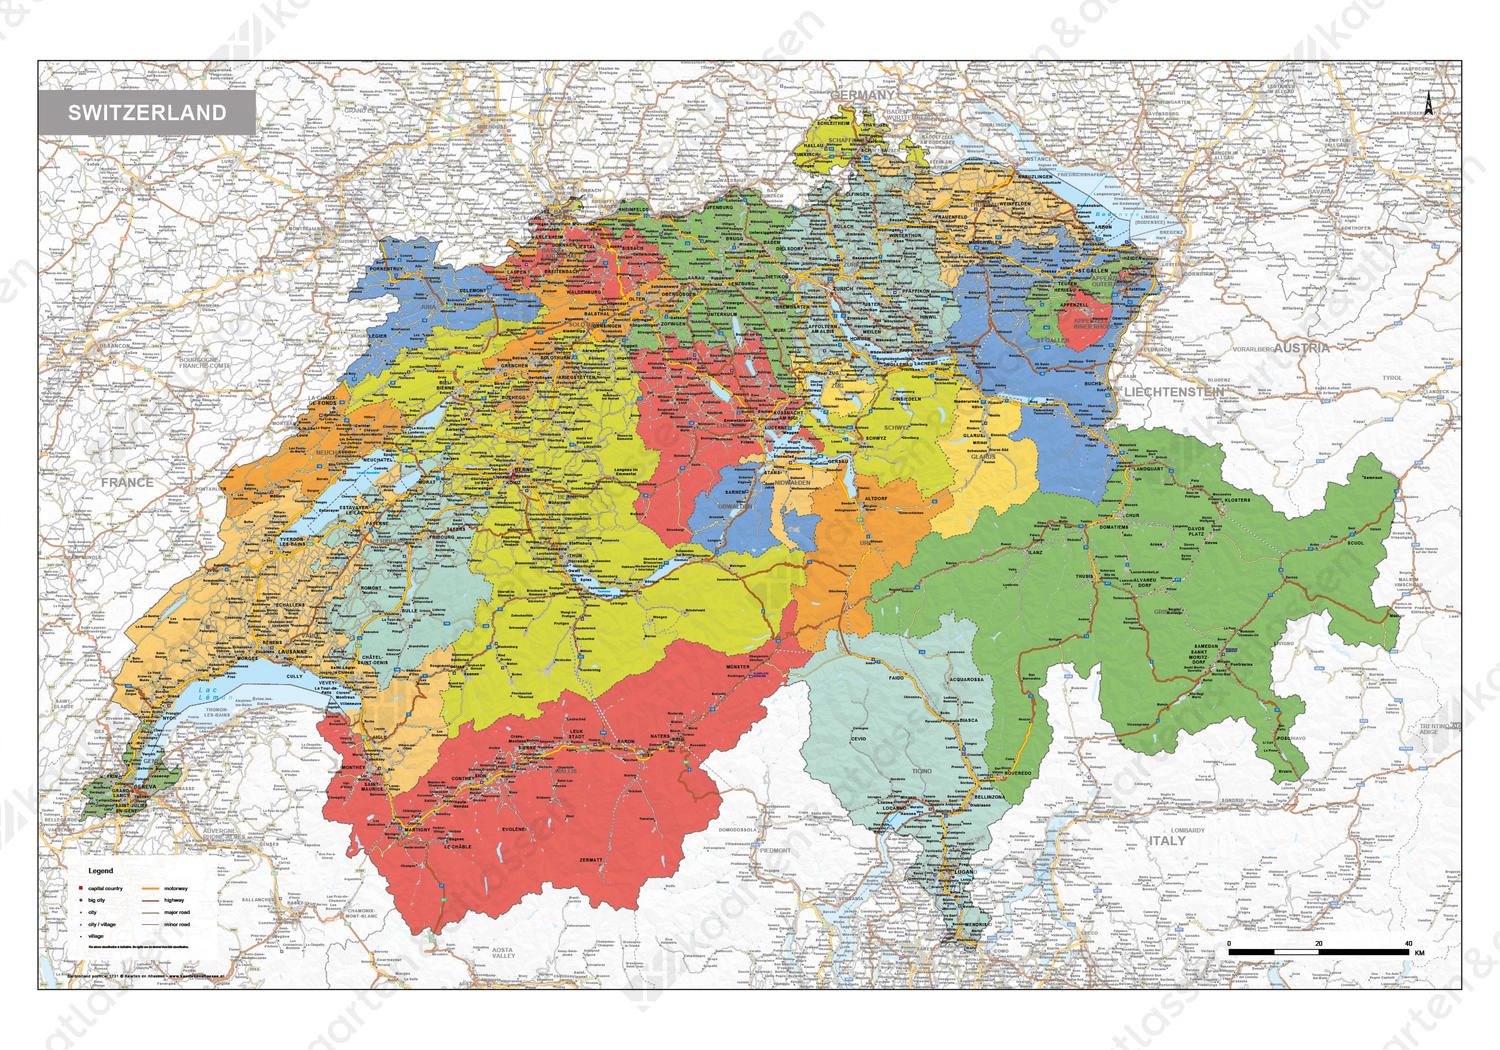 Zwitserland staatkundige kaart